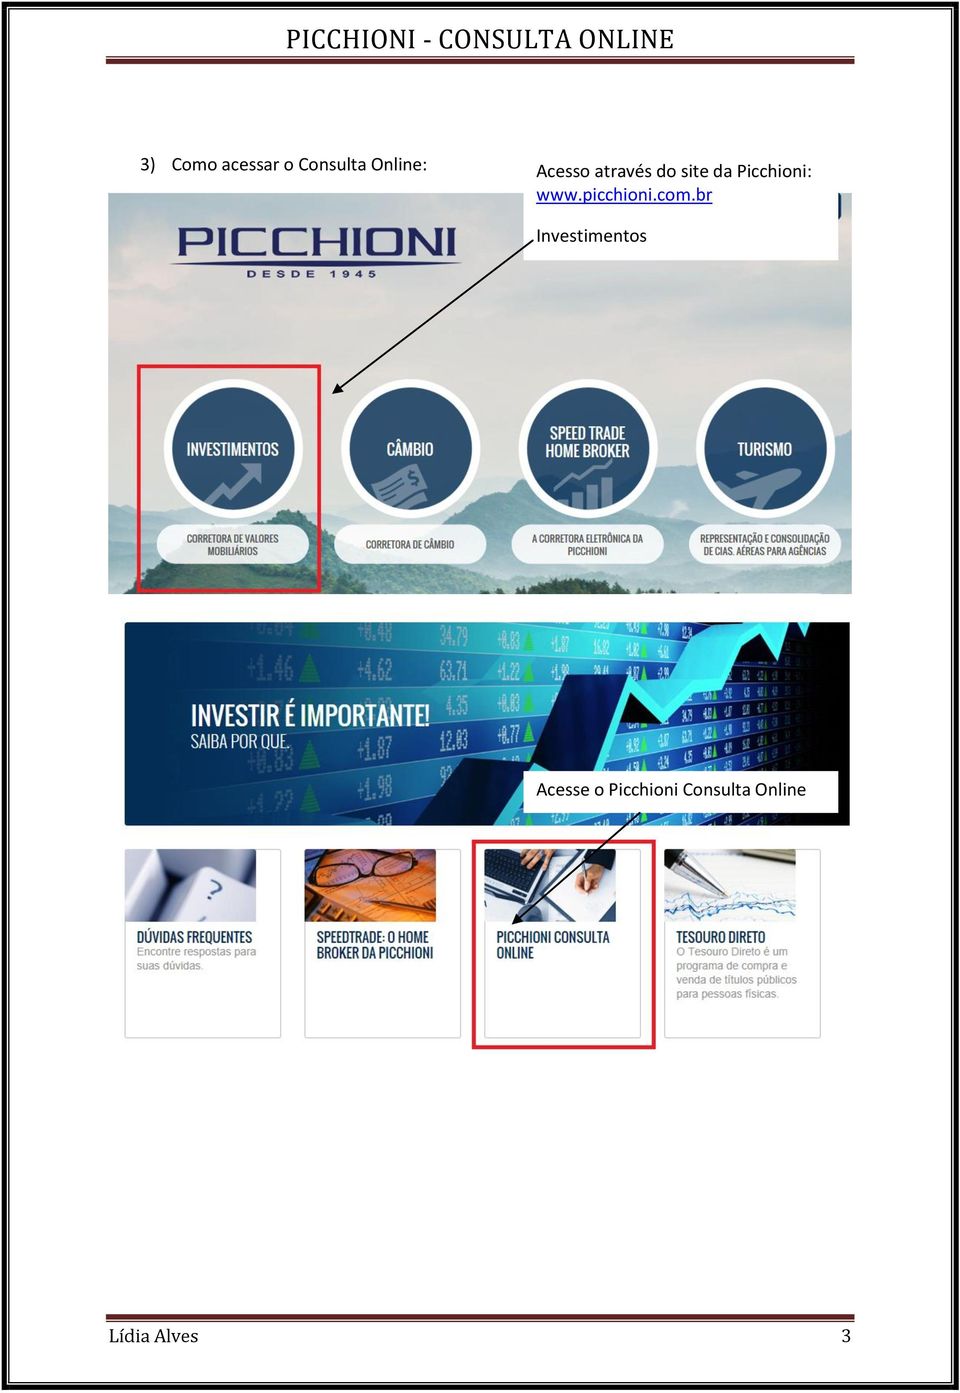 www.picchioni.com.